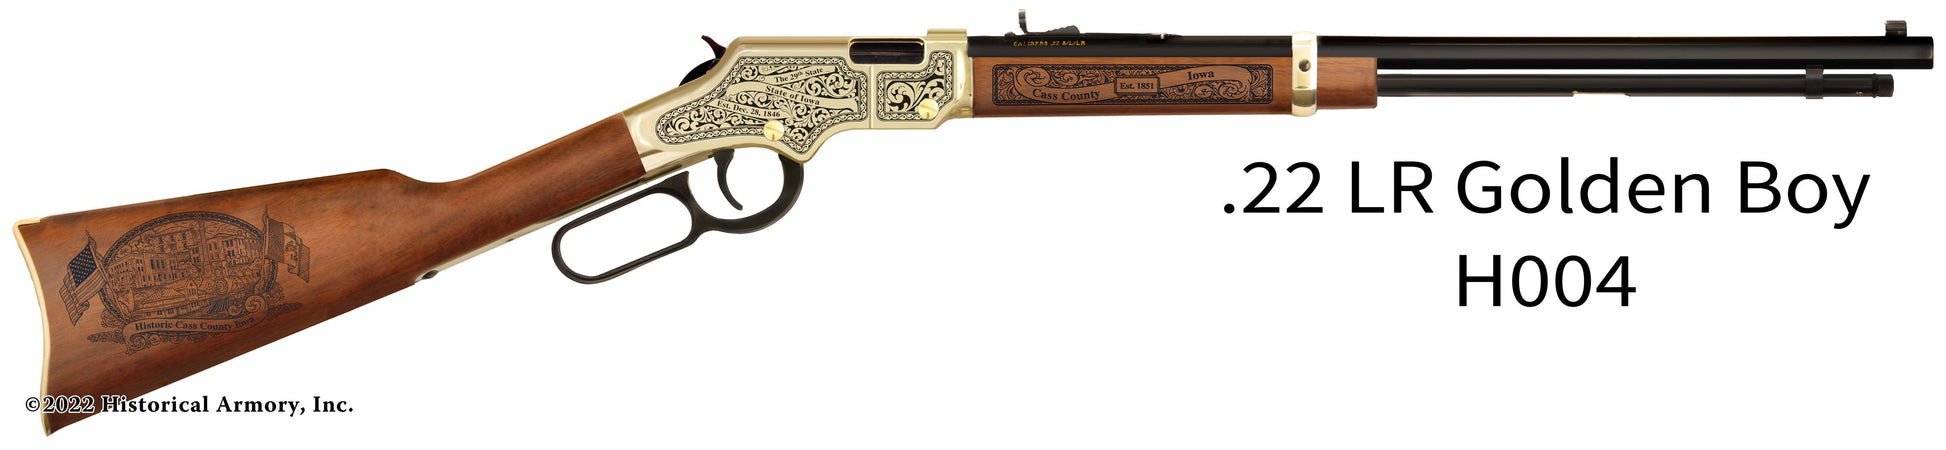 Cass County Iowa Engraved Henry Golden Boy Rifle